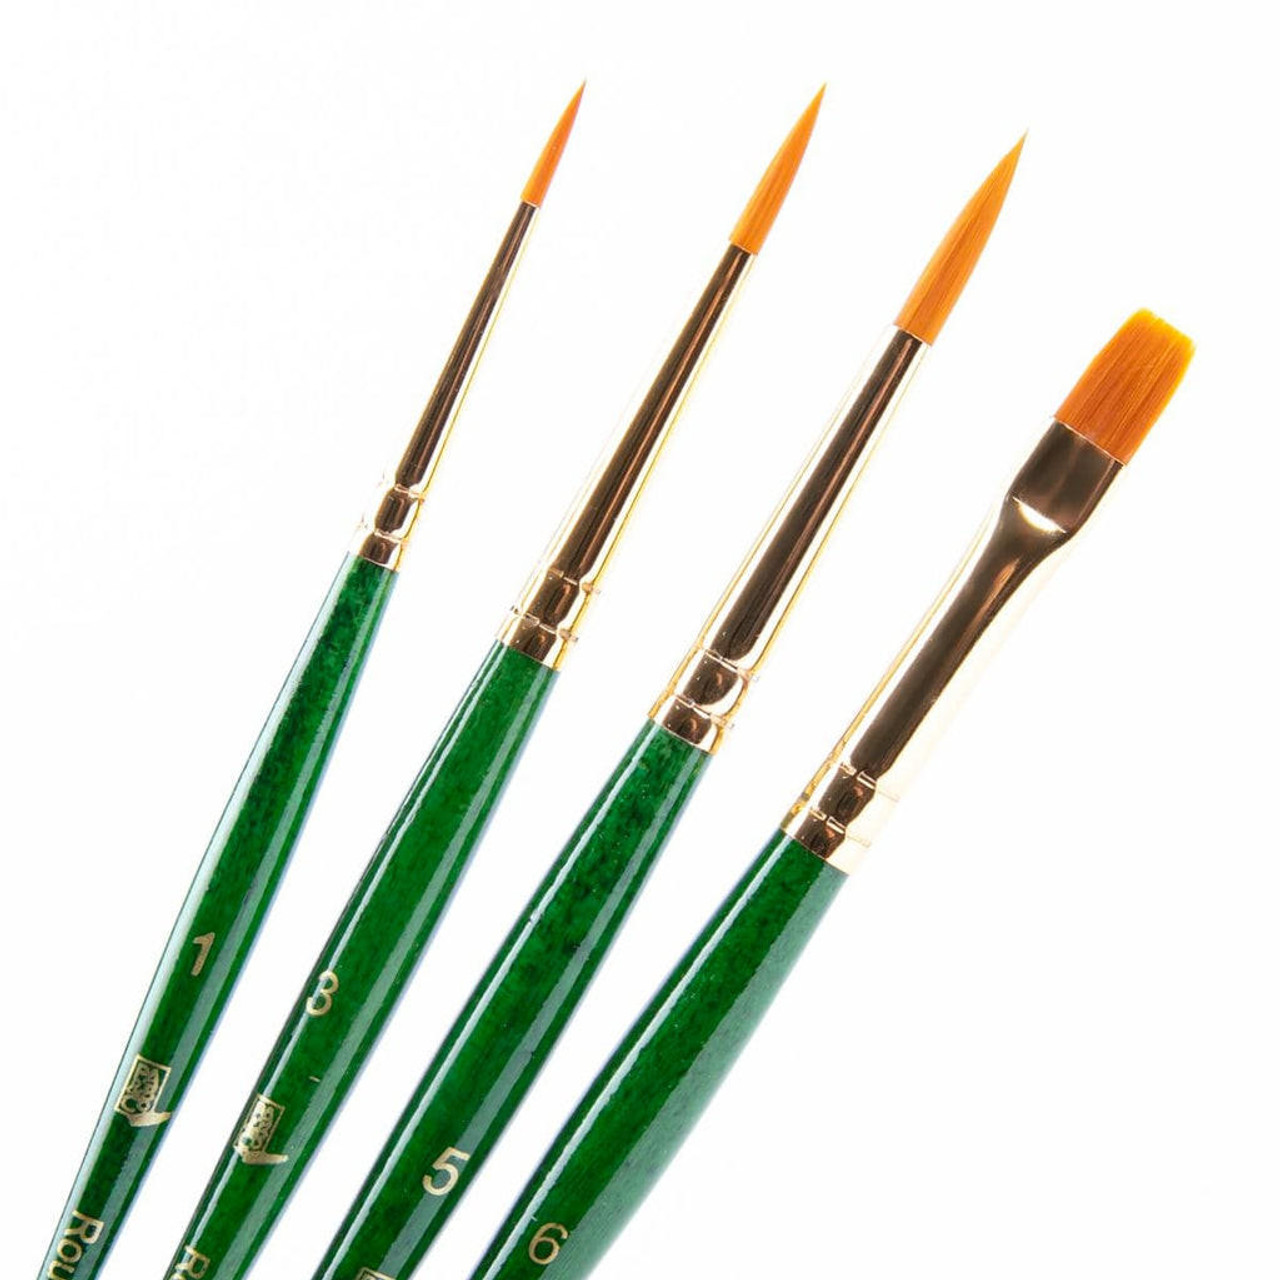 Synthetic-Golden Taklon Set of 6 brushes